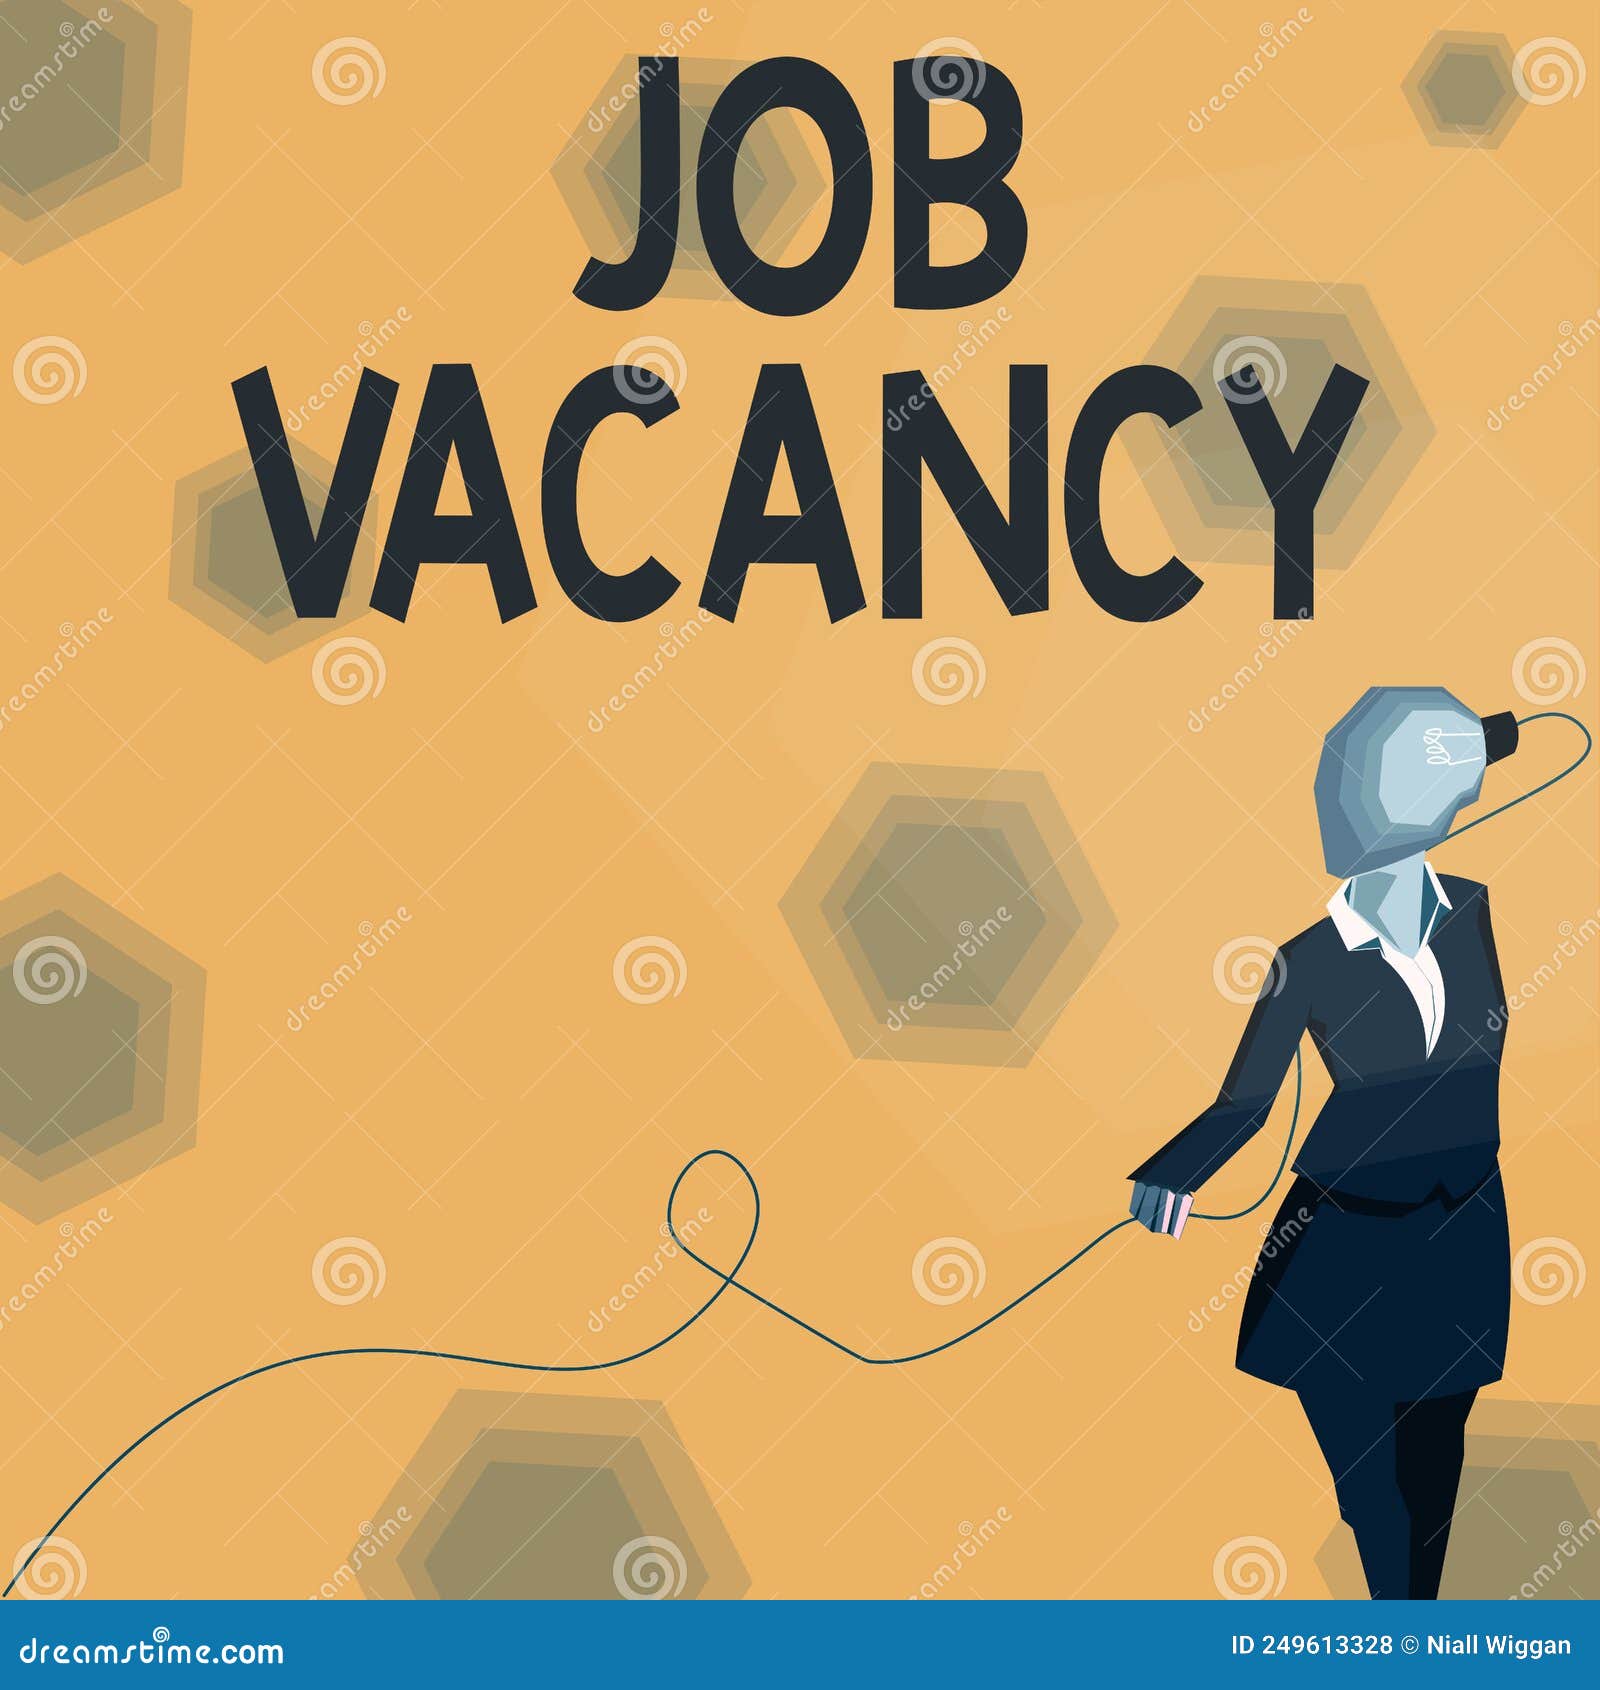 Administrative Assistant (f/m/d) 80% - 100% Job Bayer Muttenz, BL